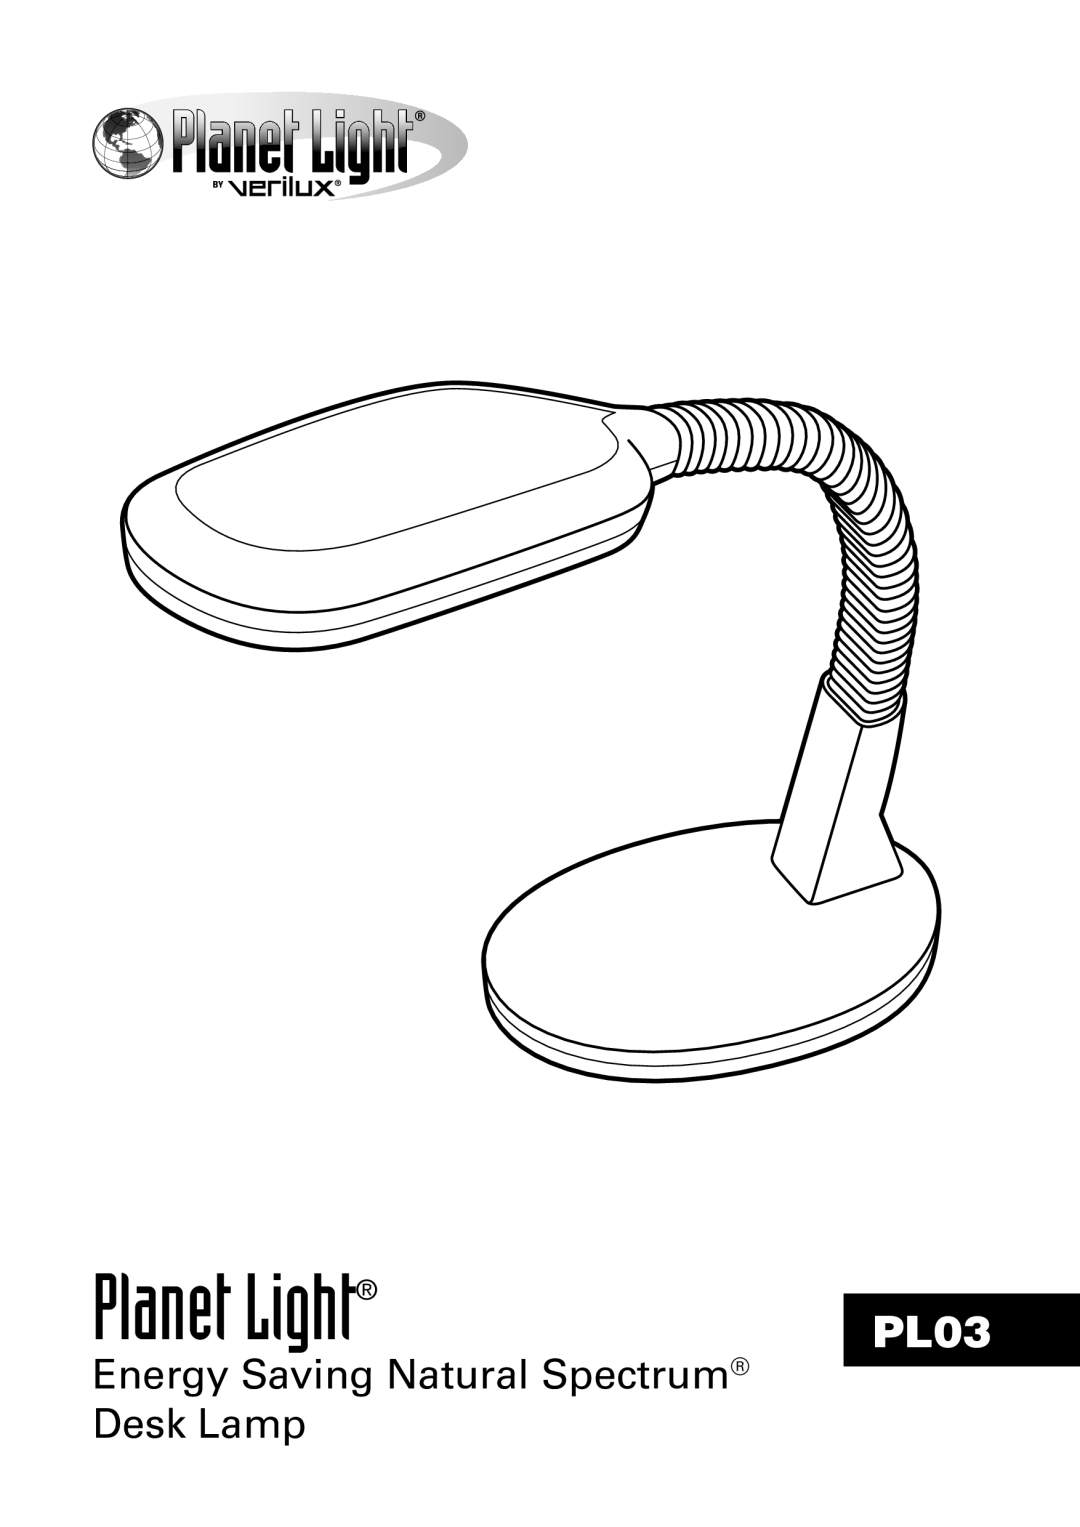 Verilux PL03 manual Planet Light, Energy Saving Natural Spectrum Desk Lamp 